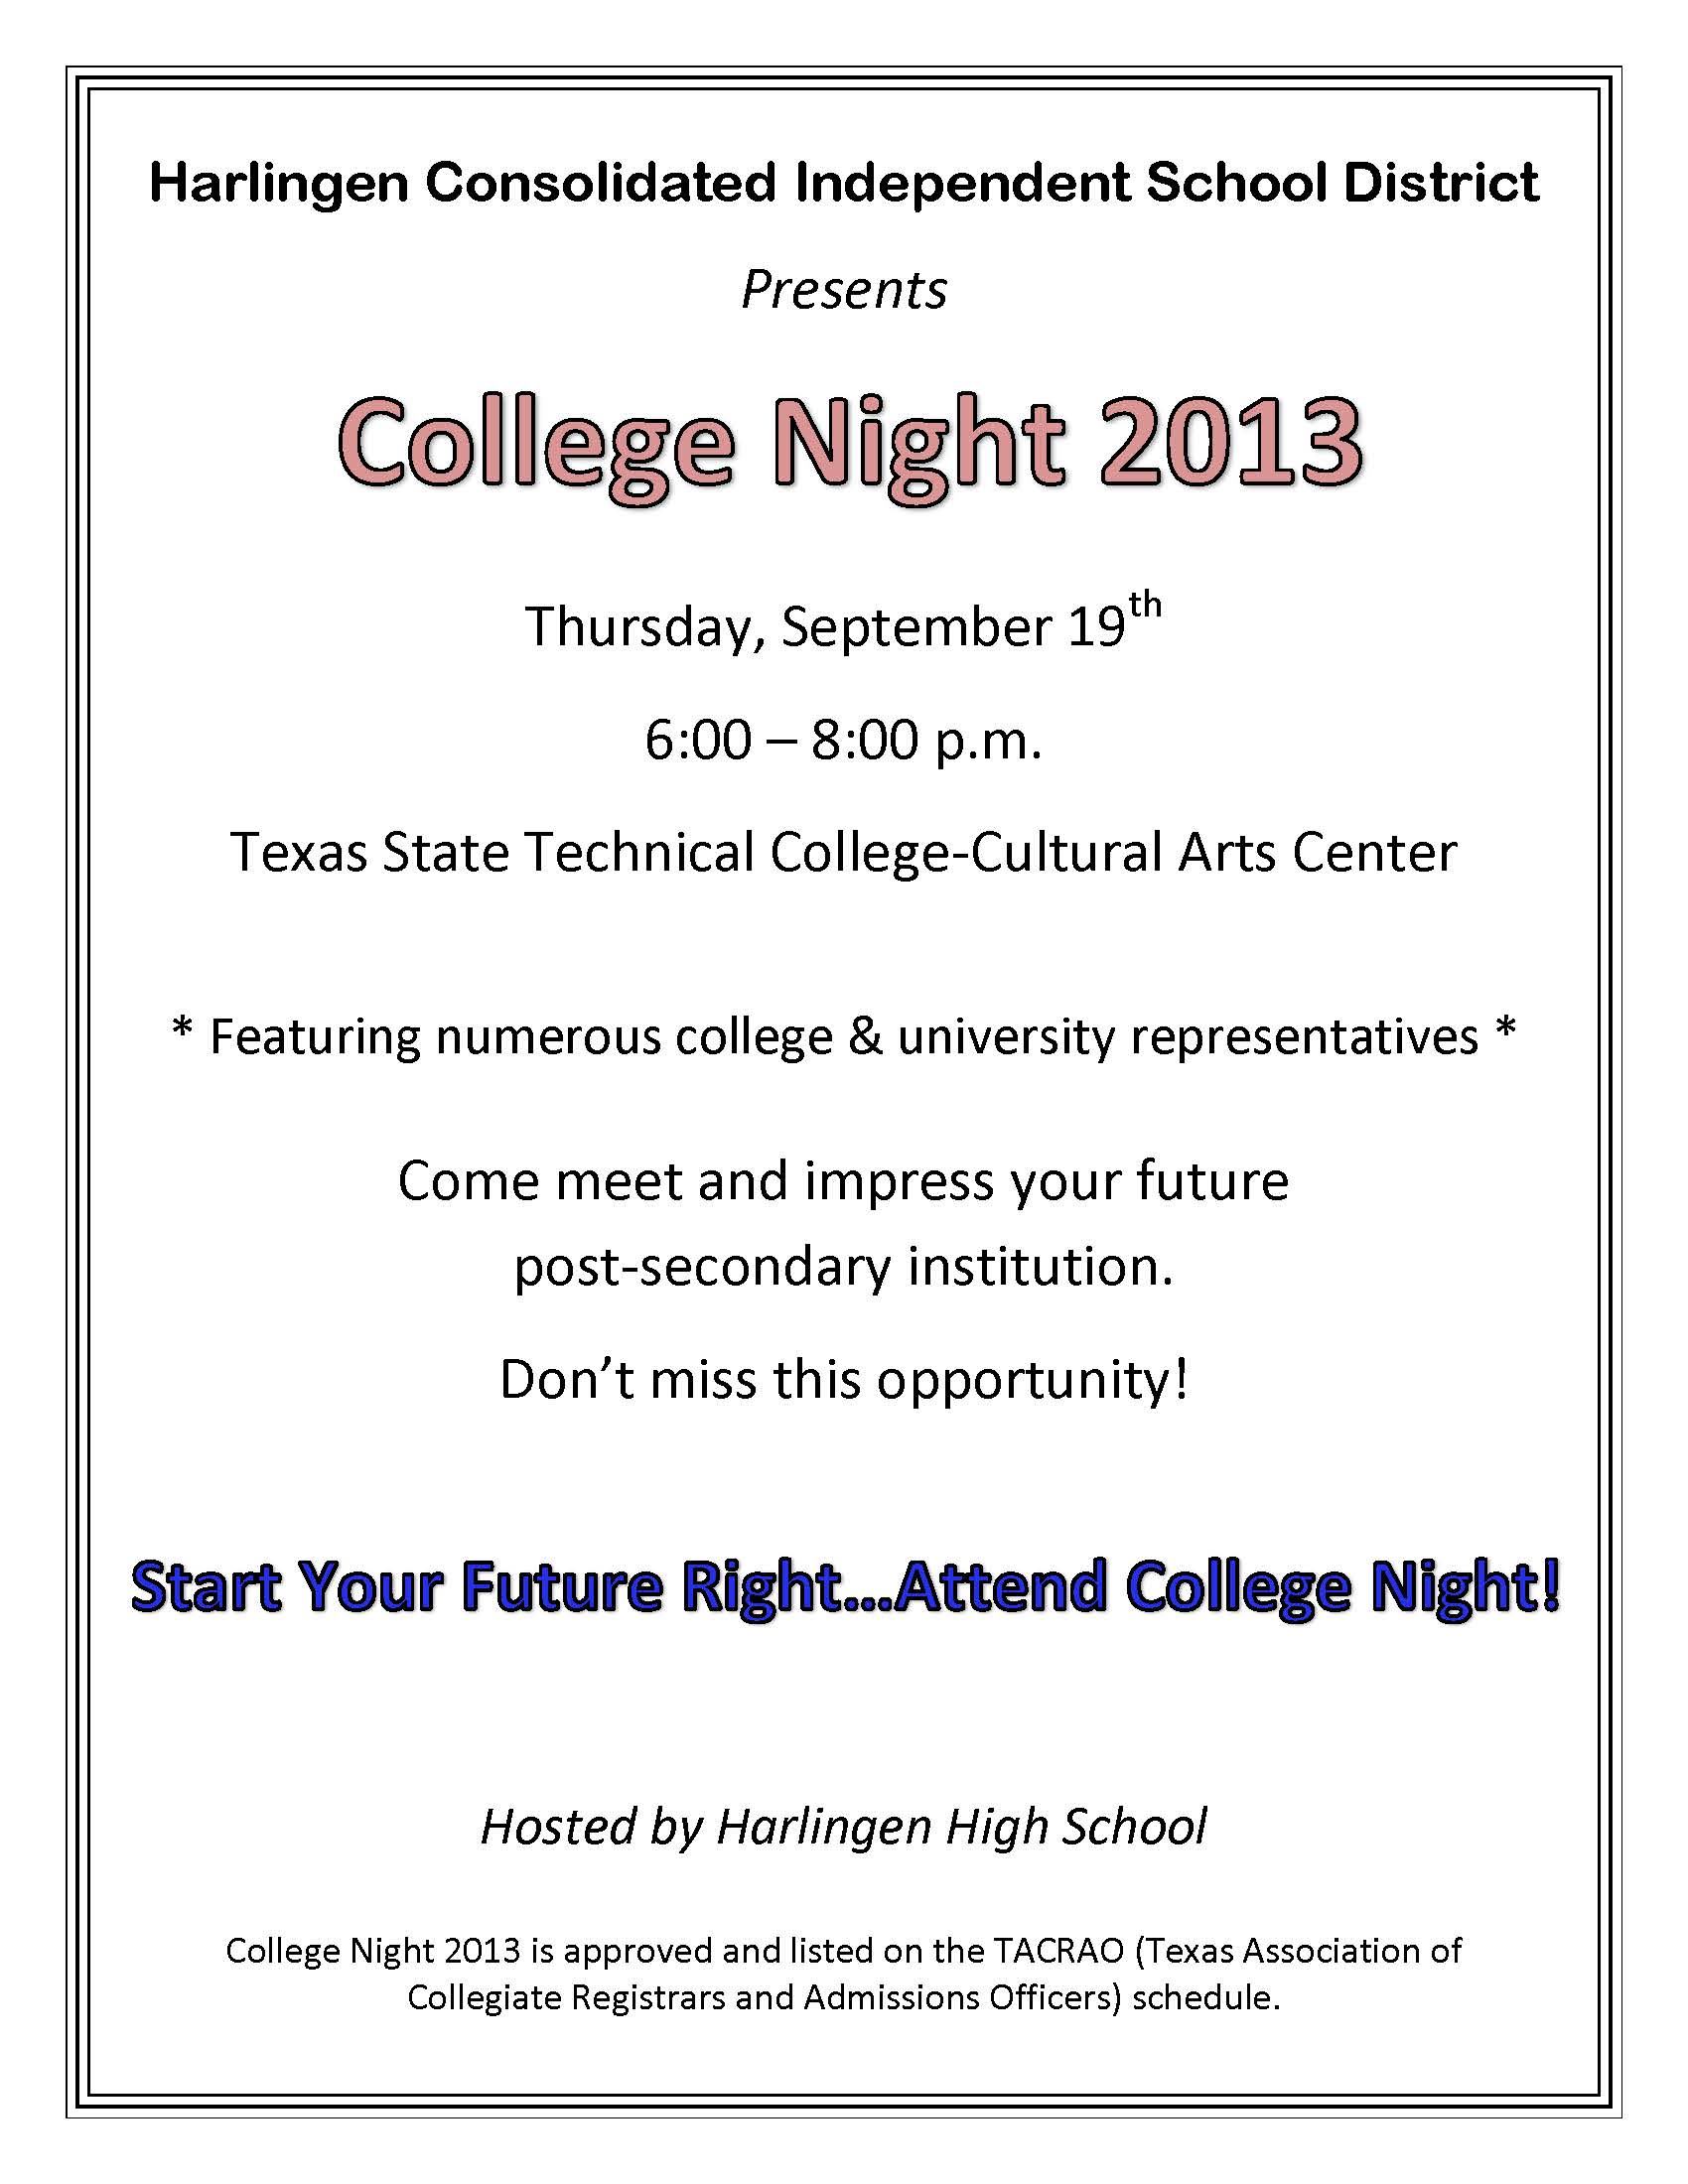 HCISD presents College Night